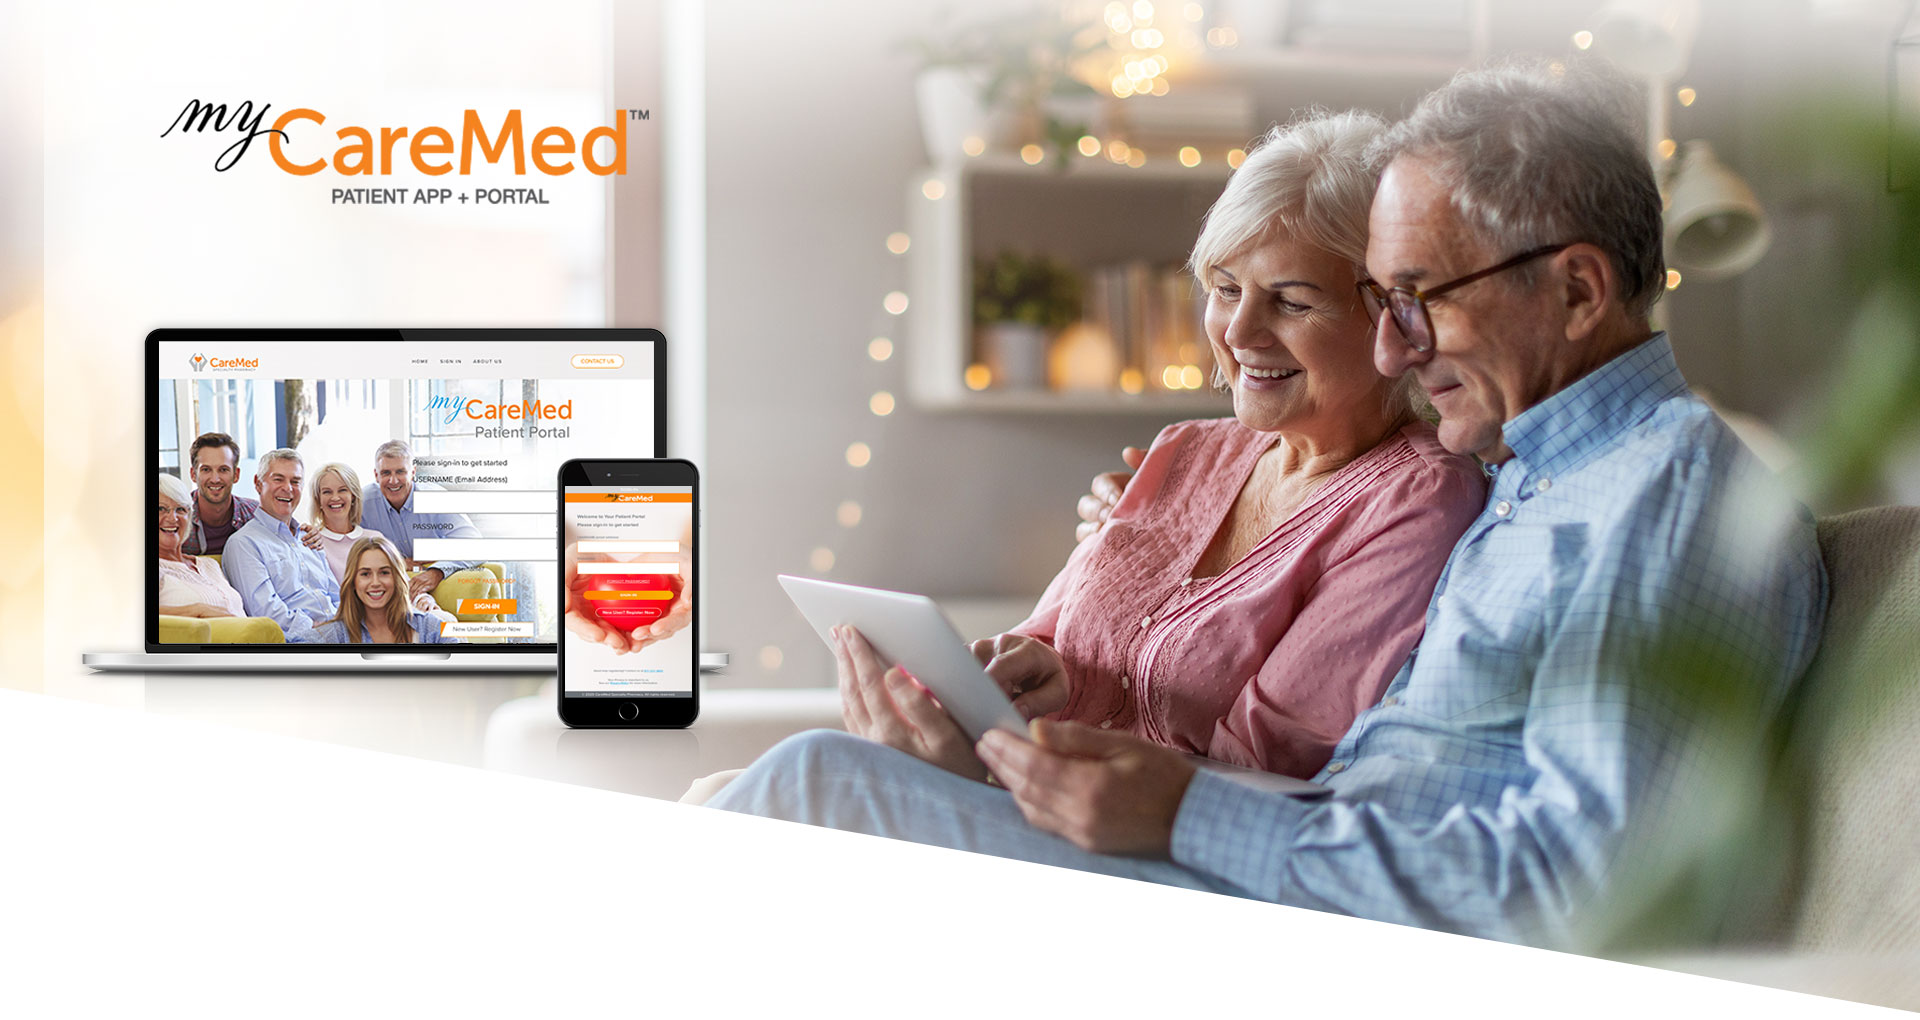 myCareMed Patient Portal and Mobile App